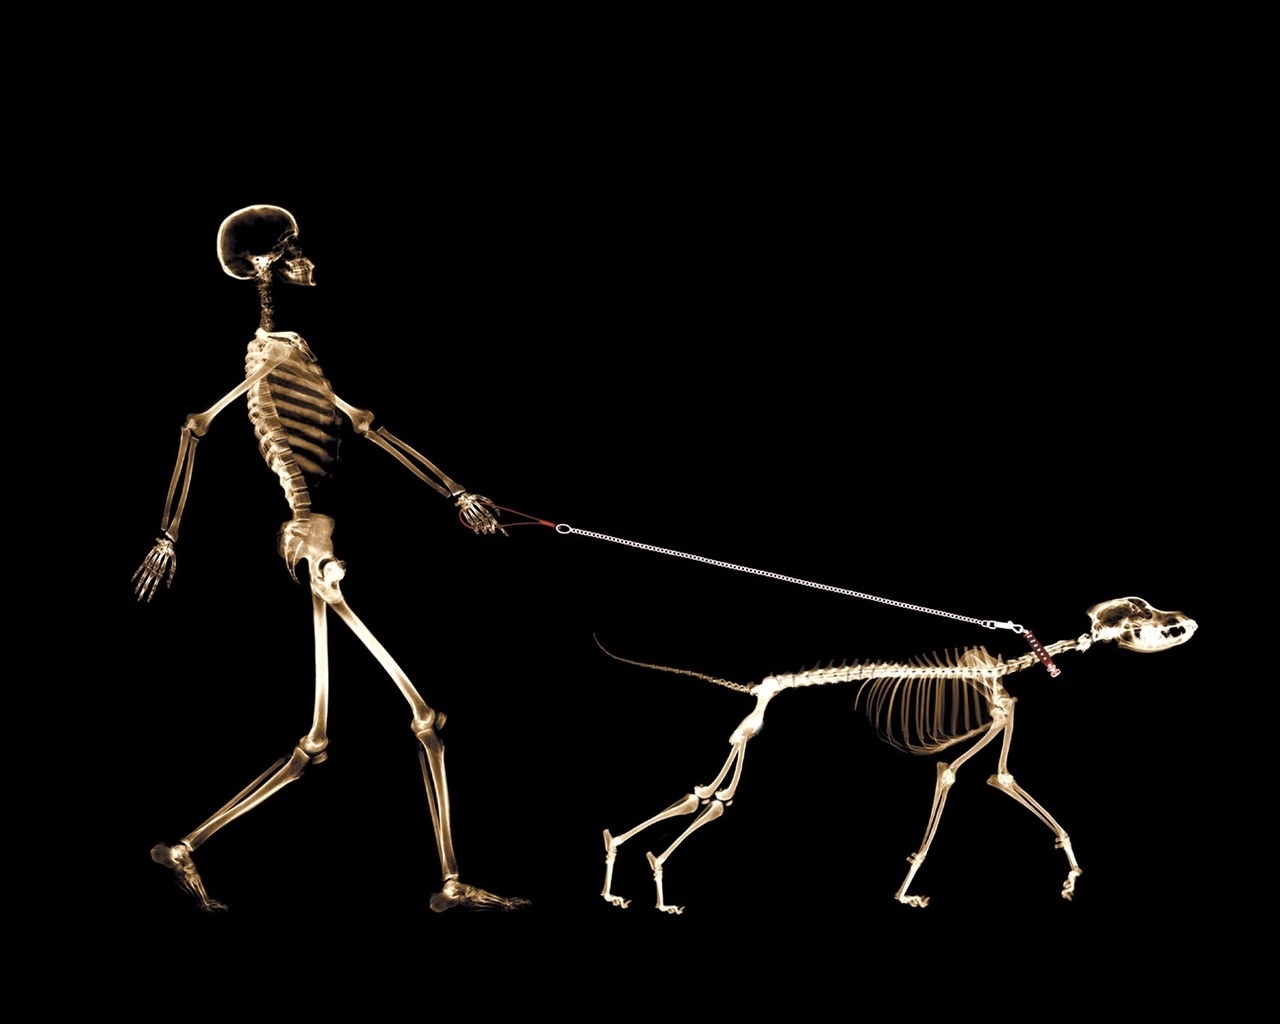 Skeletons Walking for 1280 x 1024 resolution